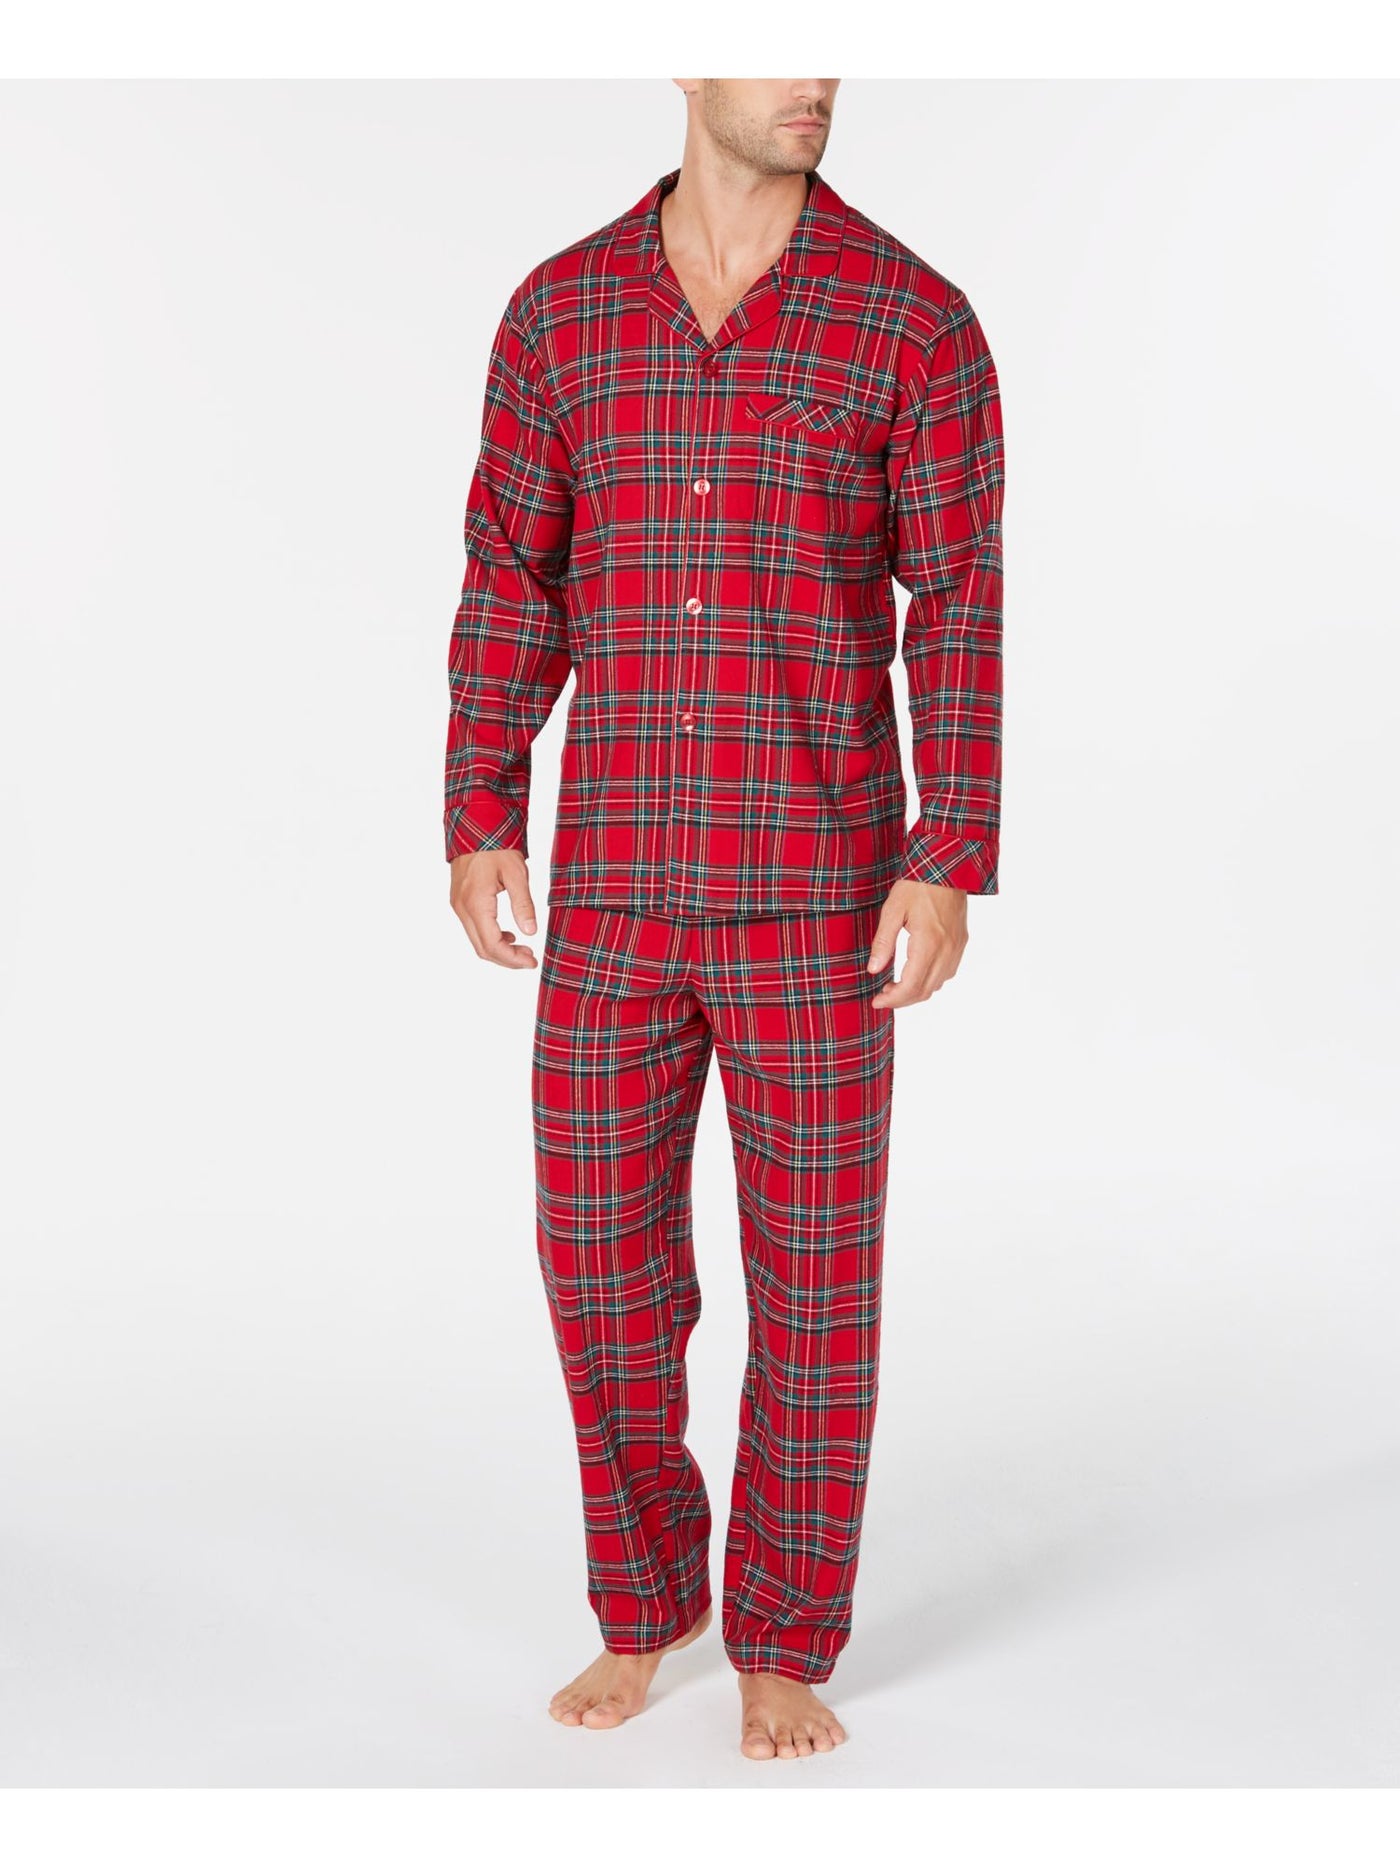 FAMILY PJs Mens Red Plaid Elastic Band Long Sleeve Button Up Top Straight leg Pants Pajamas M